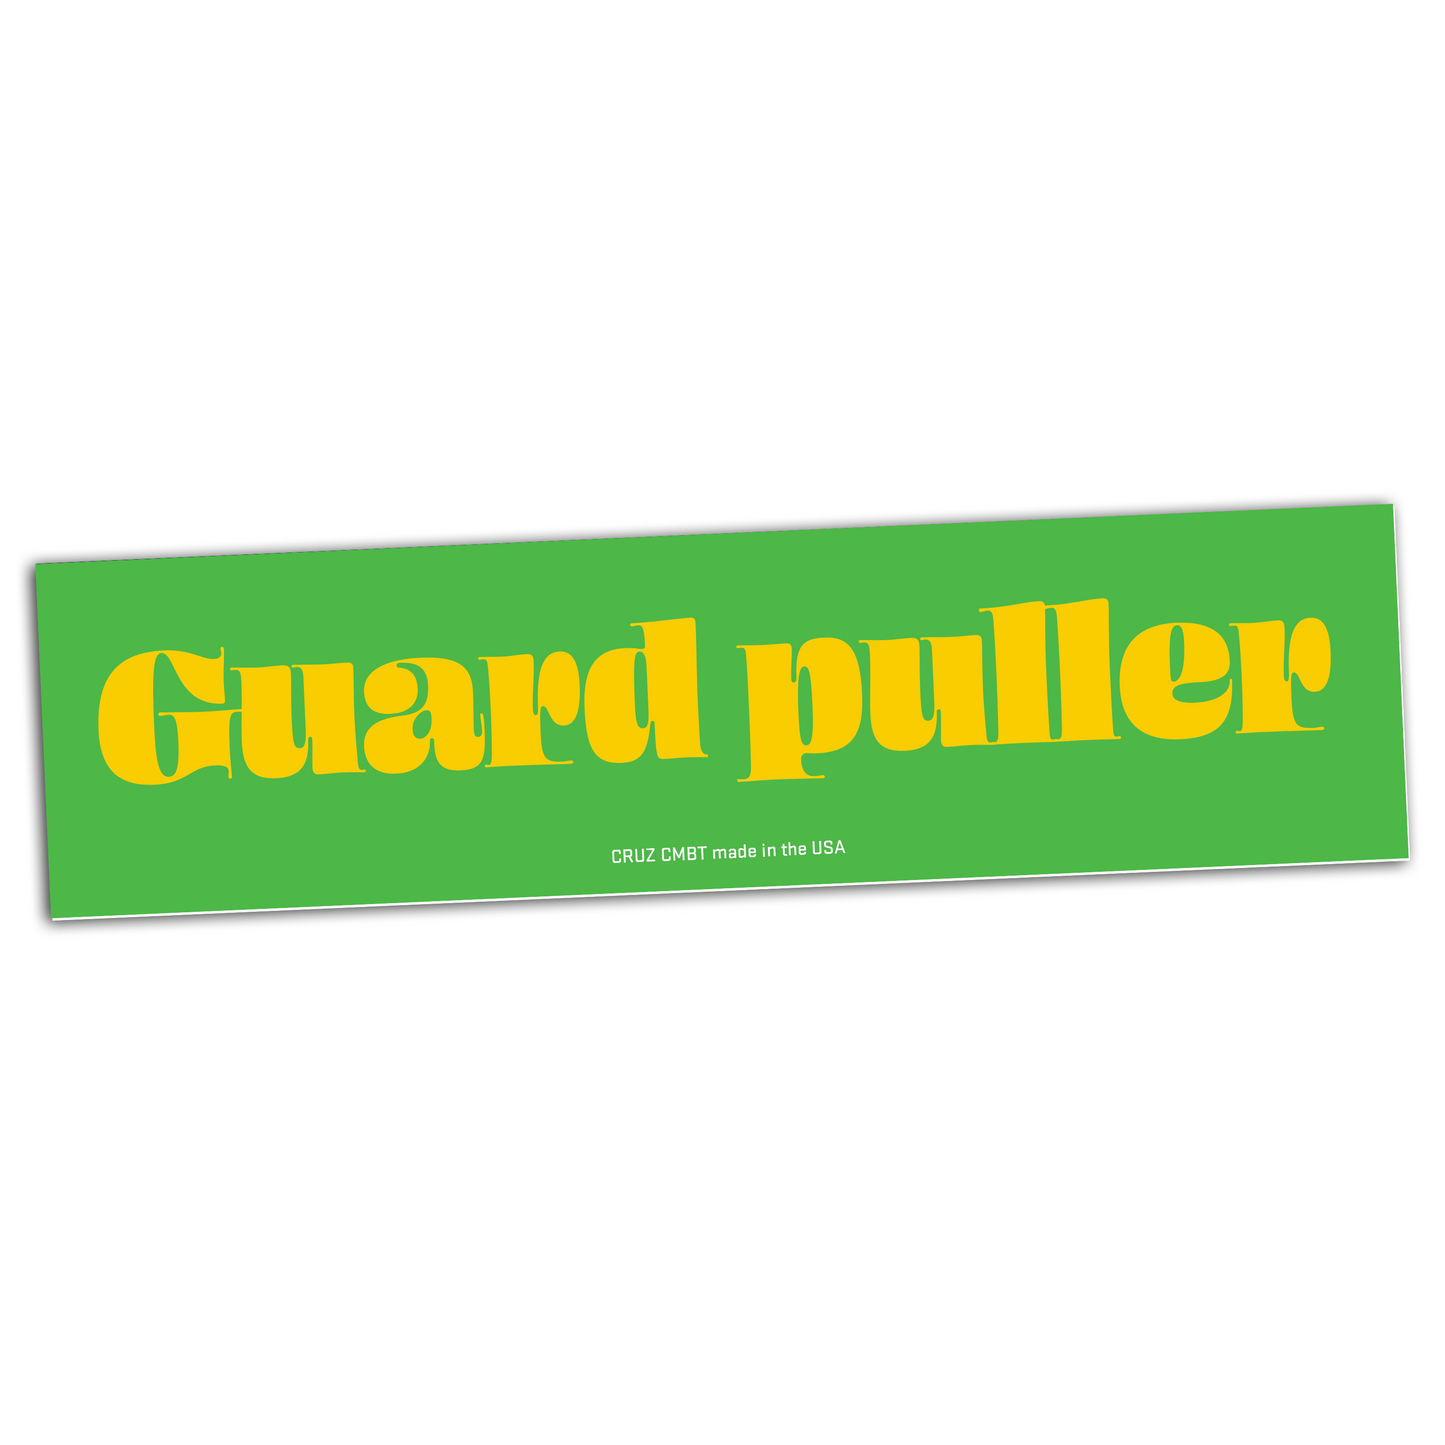 Guard Puller bumper sticker